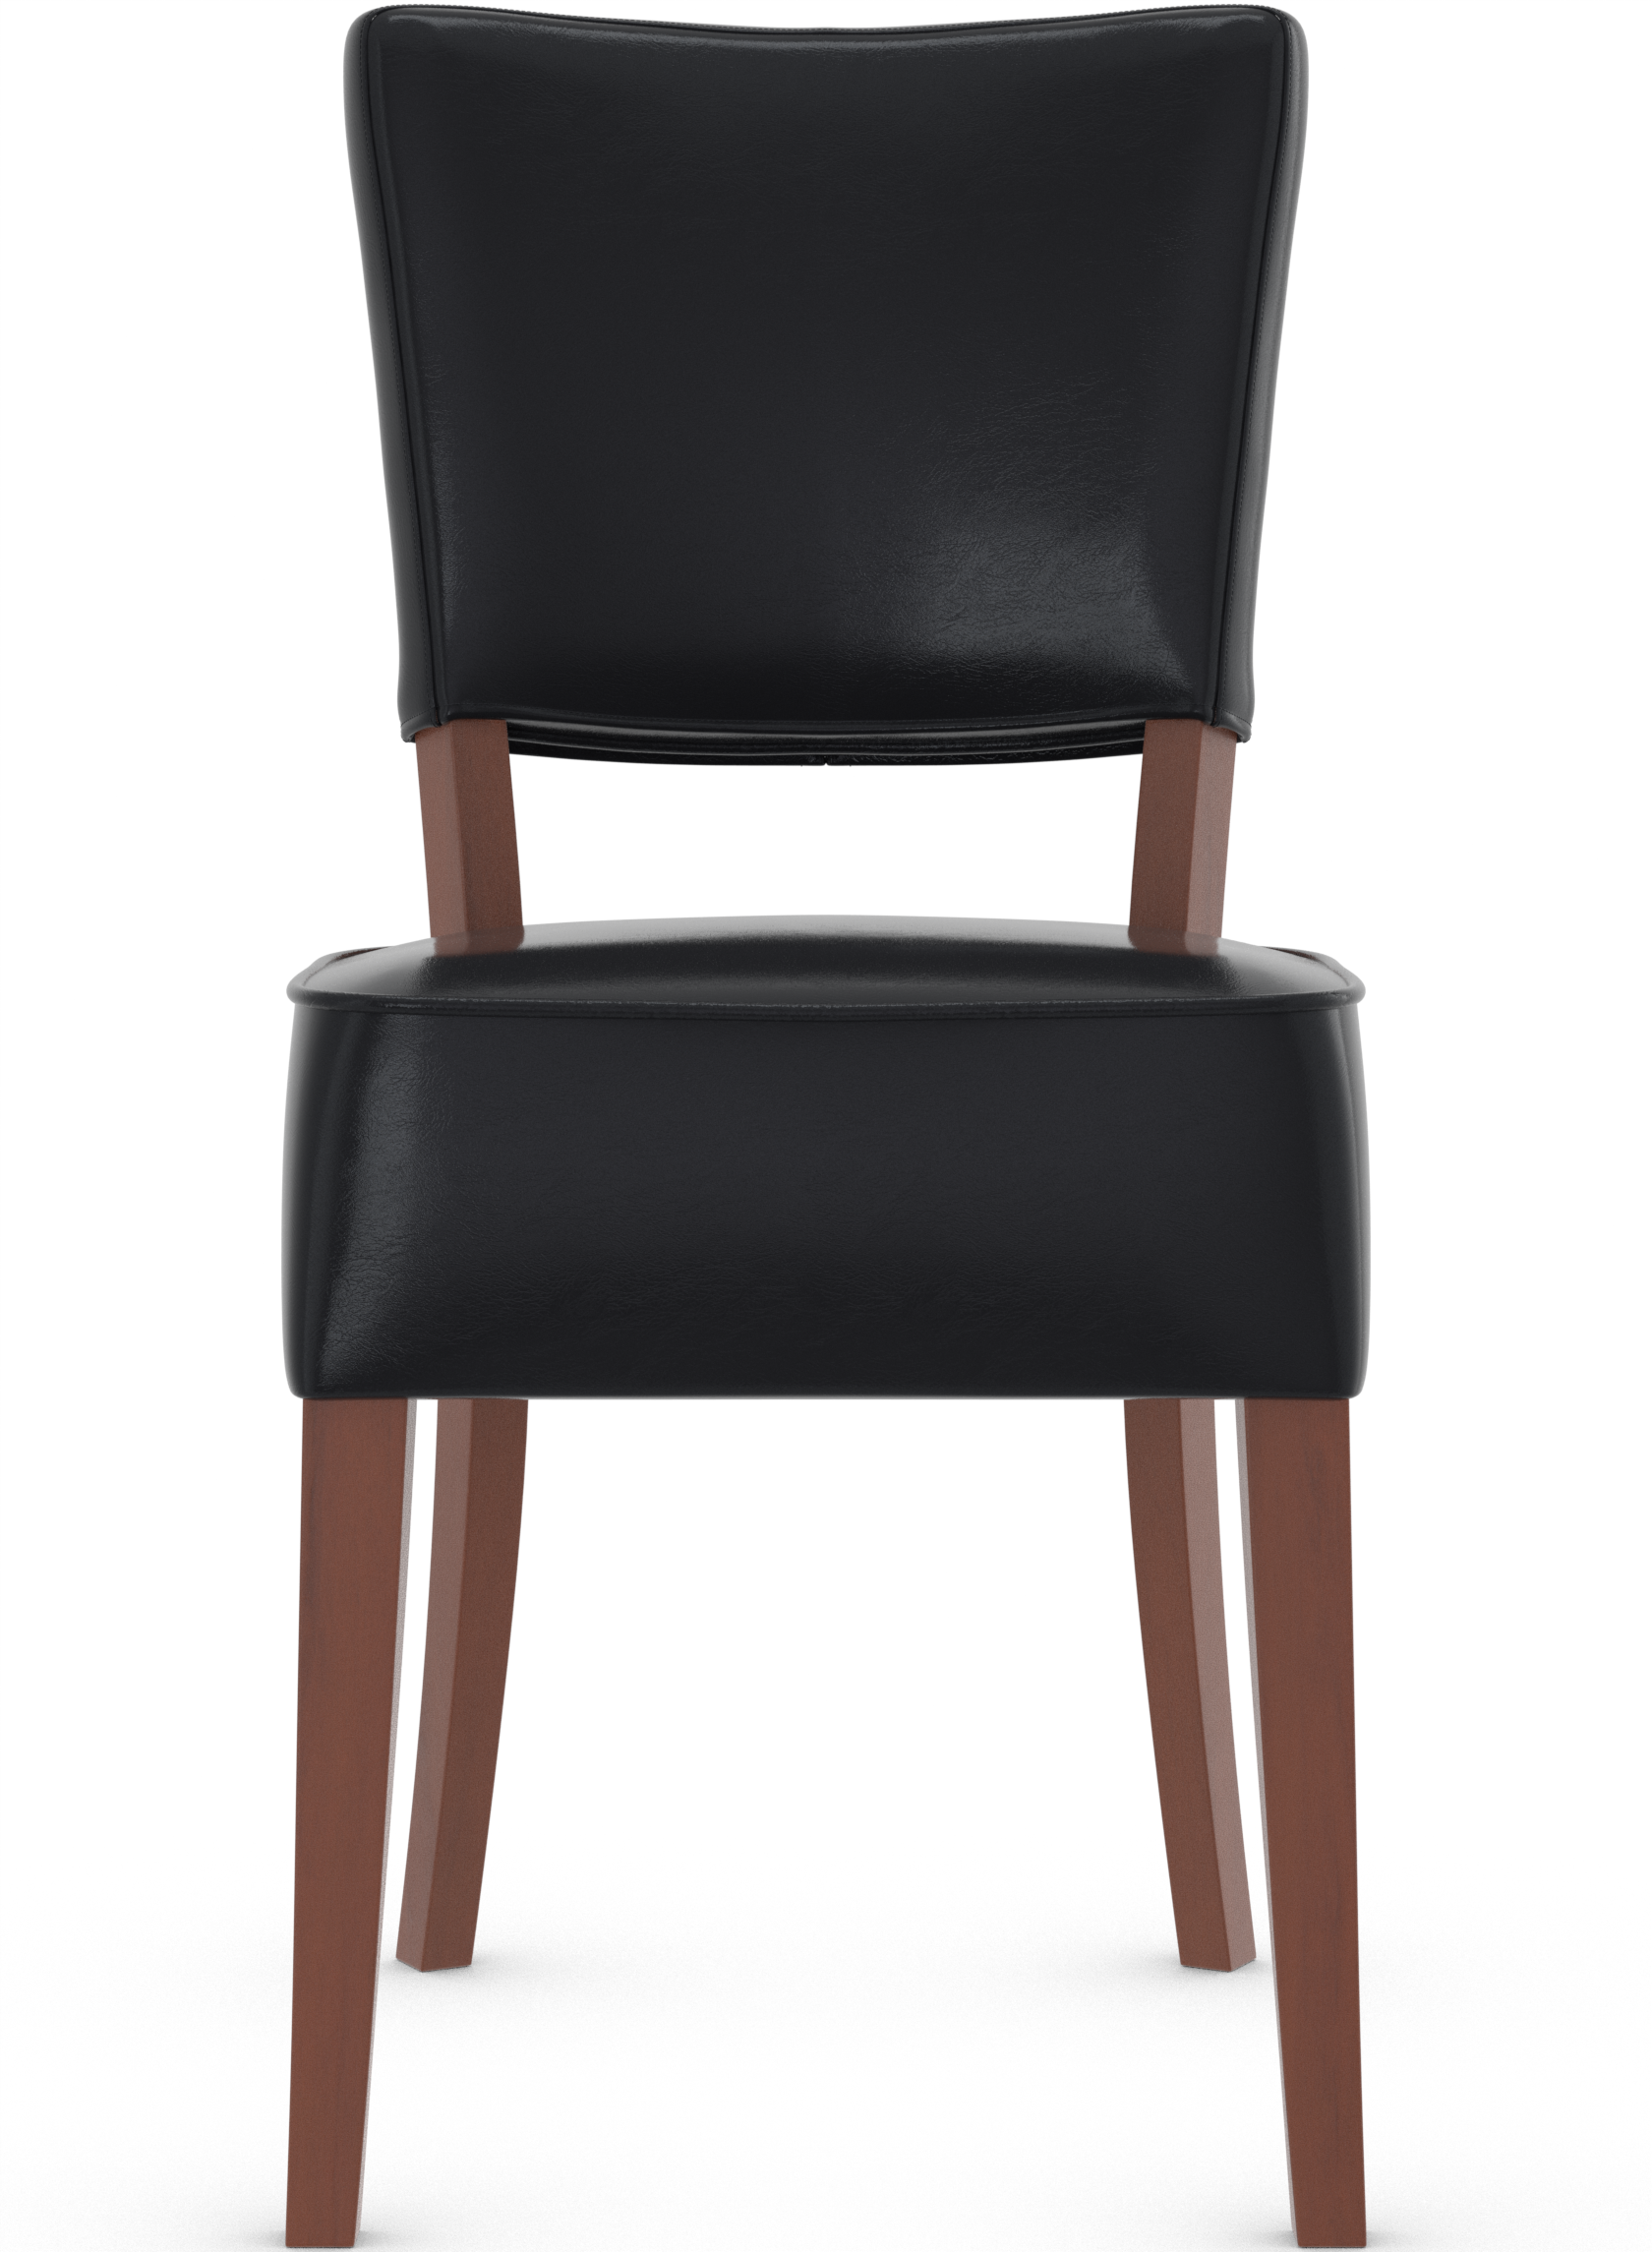 Genova Rustic Oak Dining Chair Bonded Leather